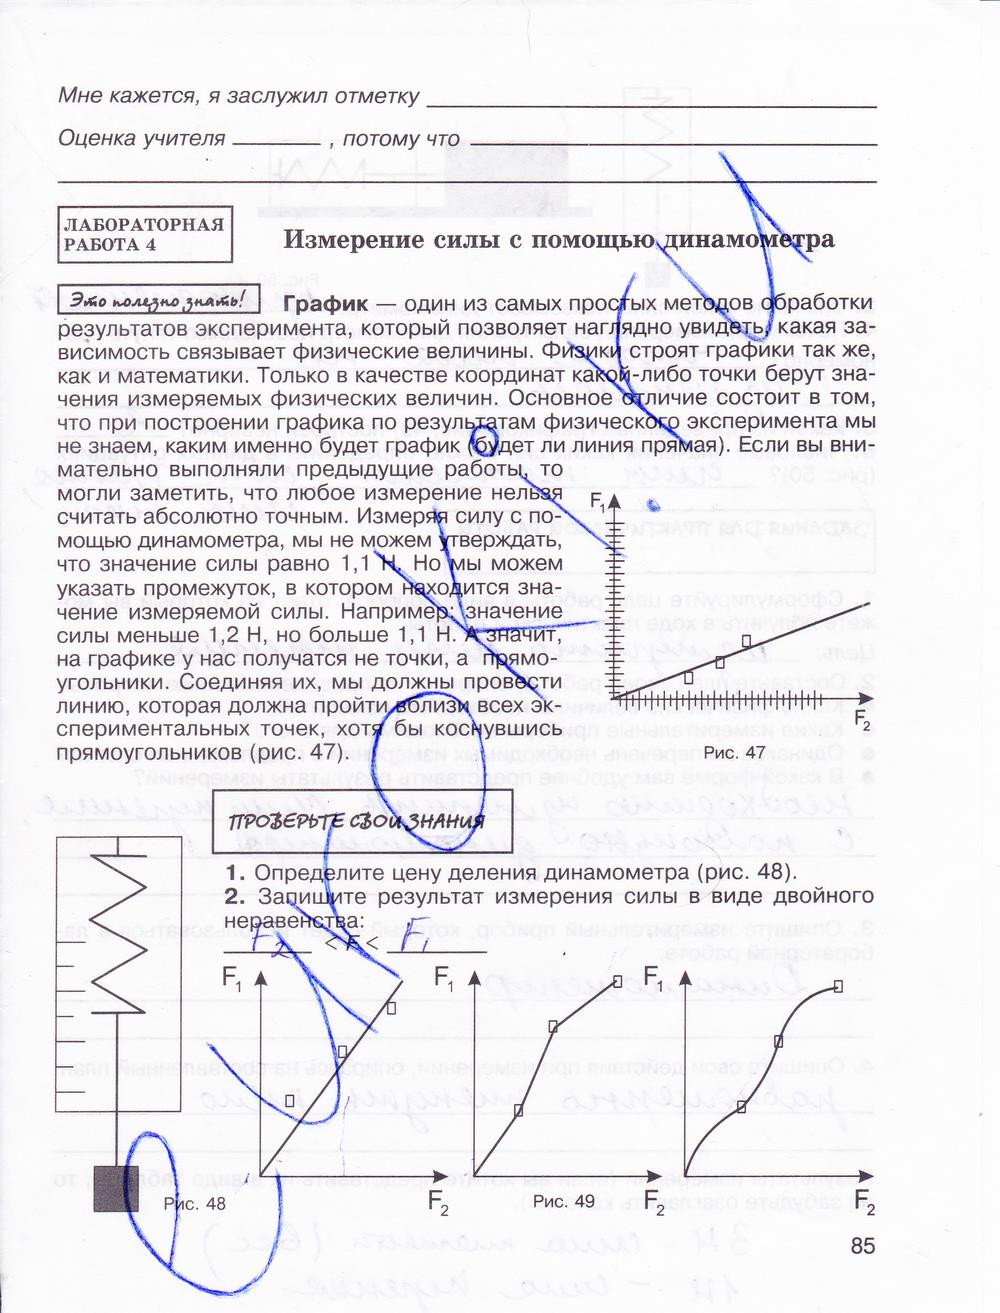 гдз 7 класс рабочая тетрадь страница 85 физика Мартынова, Бовин, Коротаев